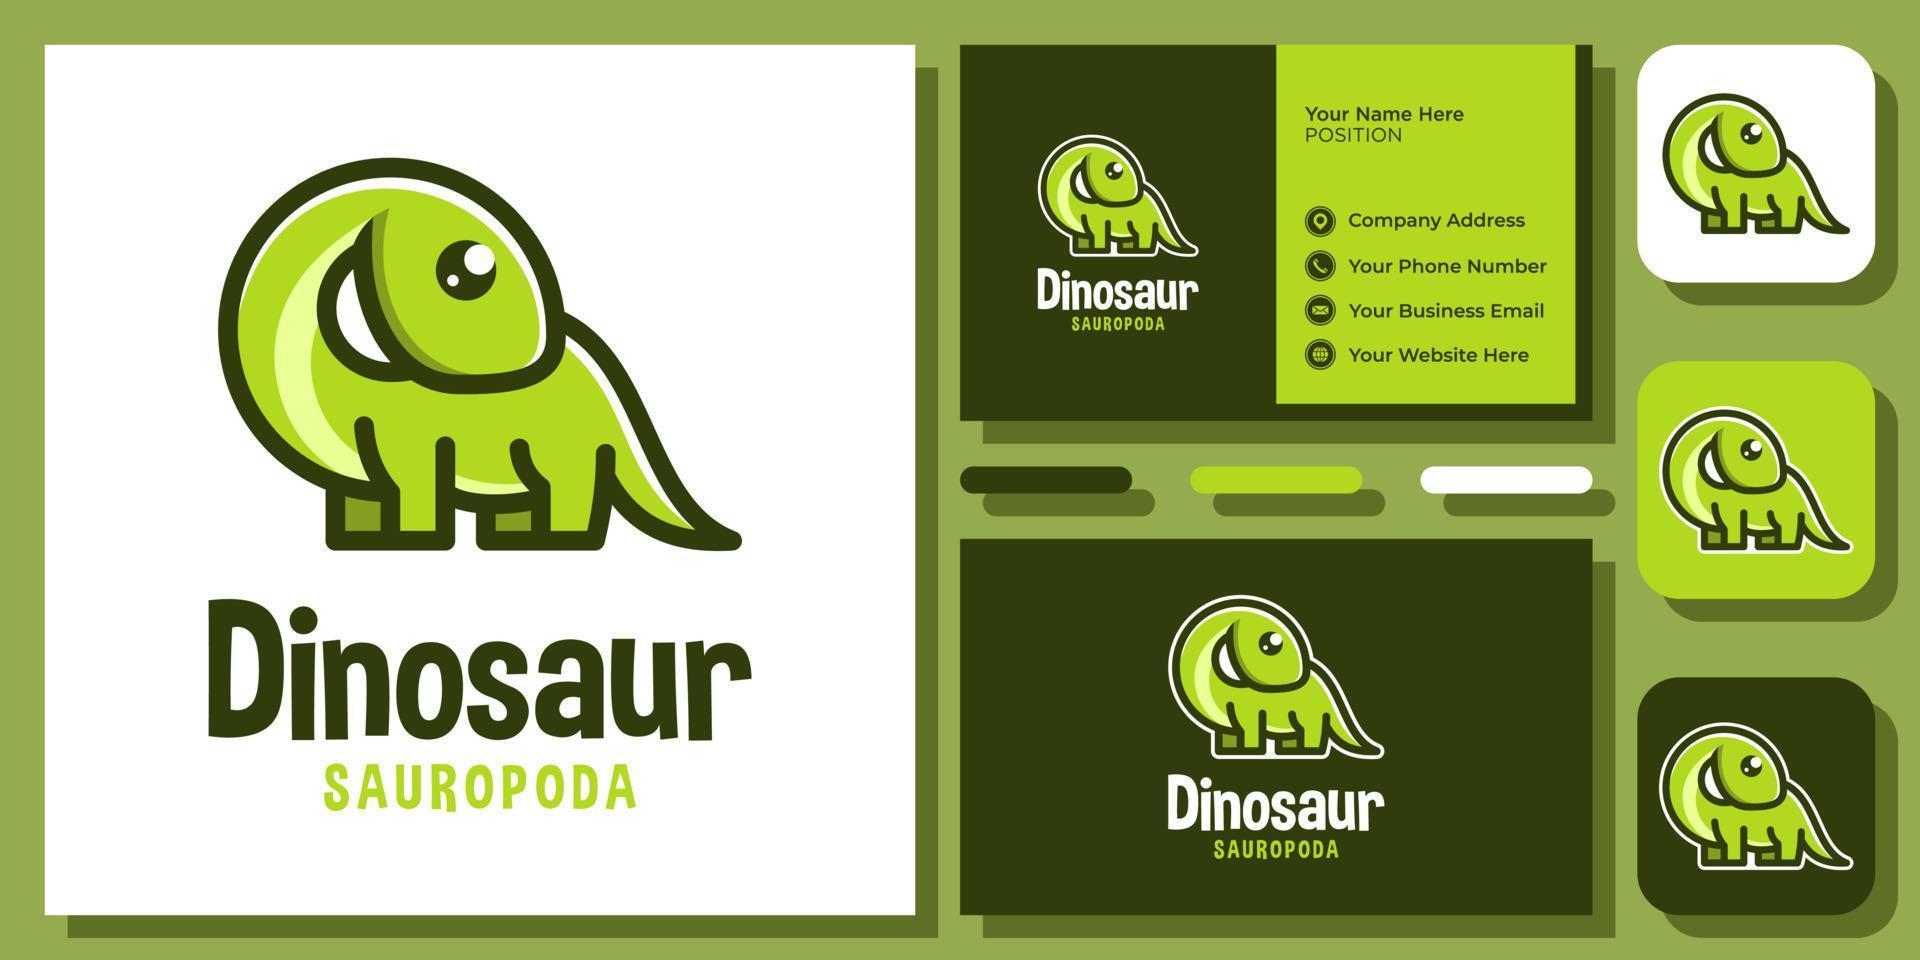 Cute Dinosaur Sauropod Animal Cartoon Funny Wildlife Nature Logo Design with Business Card Template vector